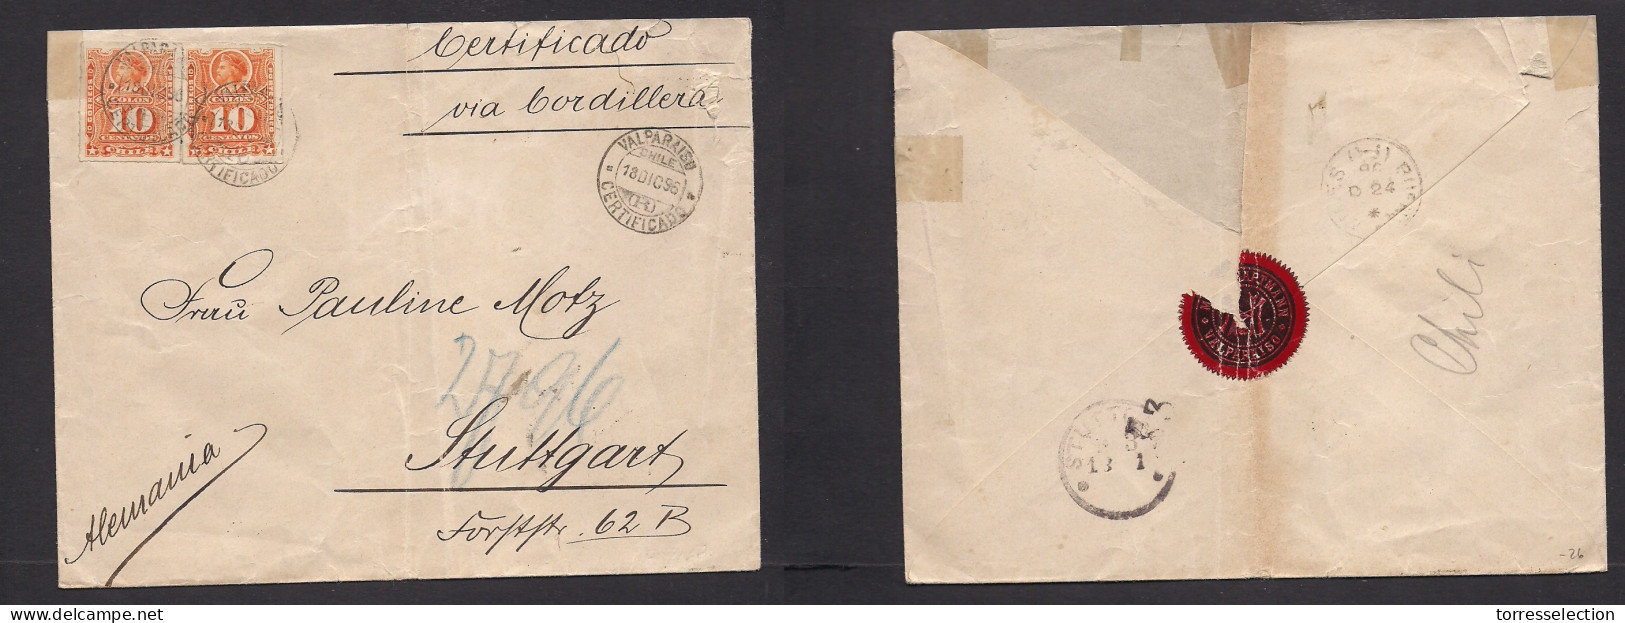 CHILE. 1896 (18 Dec) Valp - Germany, Stuttgart. Registered 20c Rate Multifkd 10c Orange Perce Paid, Tied Cds. Via Cordil - Chili